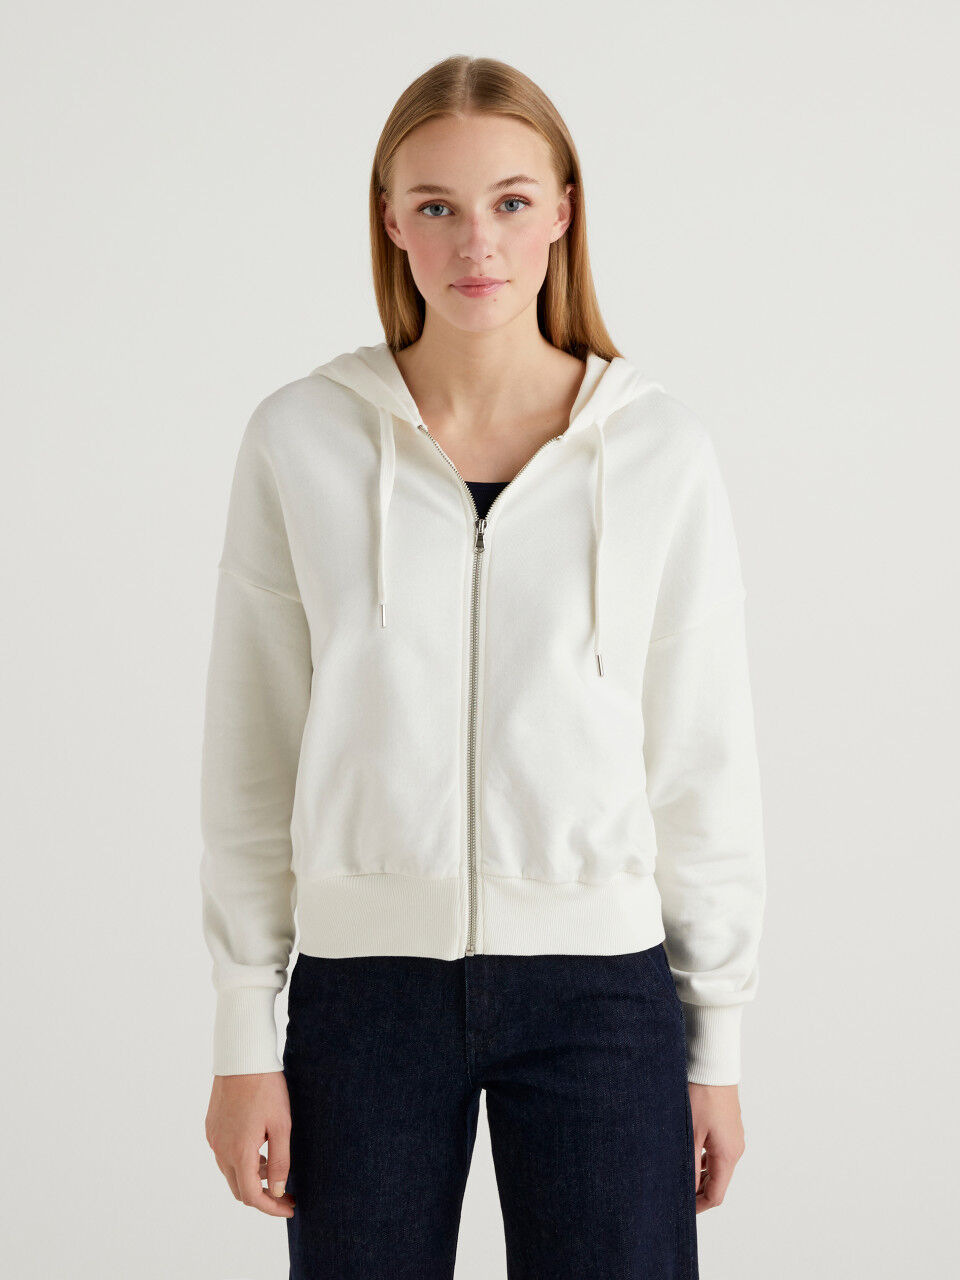 Beige S WOMEN FASHION Jumpers & Sweatshirts Hoodie discount 65% Zara sweatshirt 